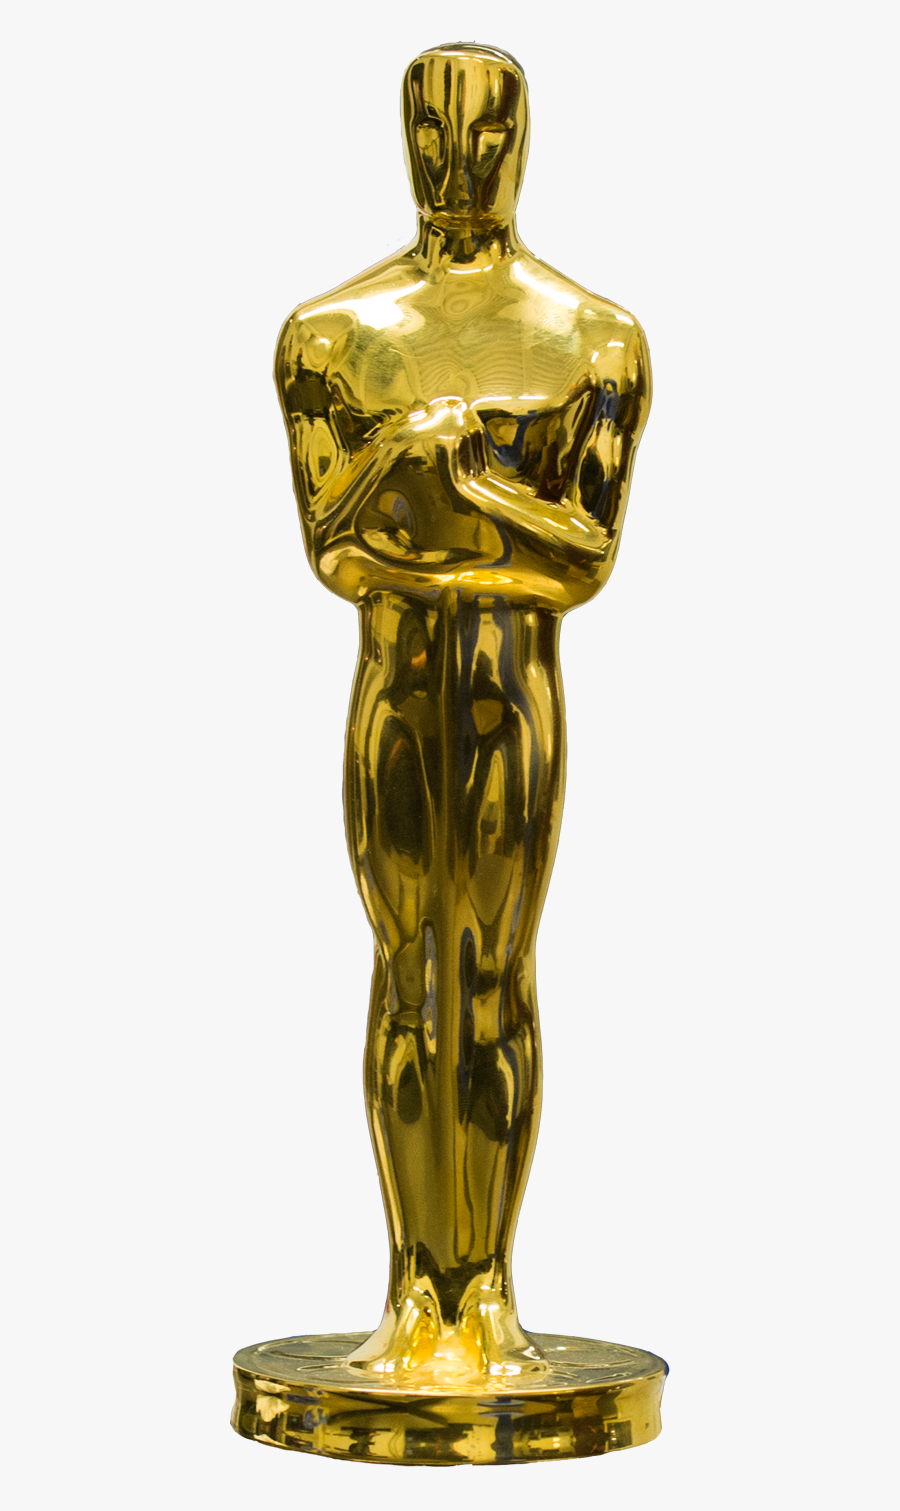 Academy Award Statue Png - Transparent Oscar Trophy Png, Transparent Clipart